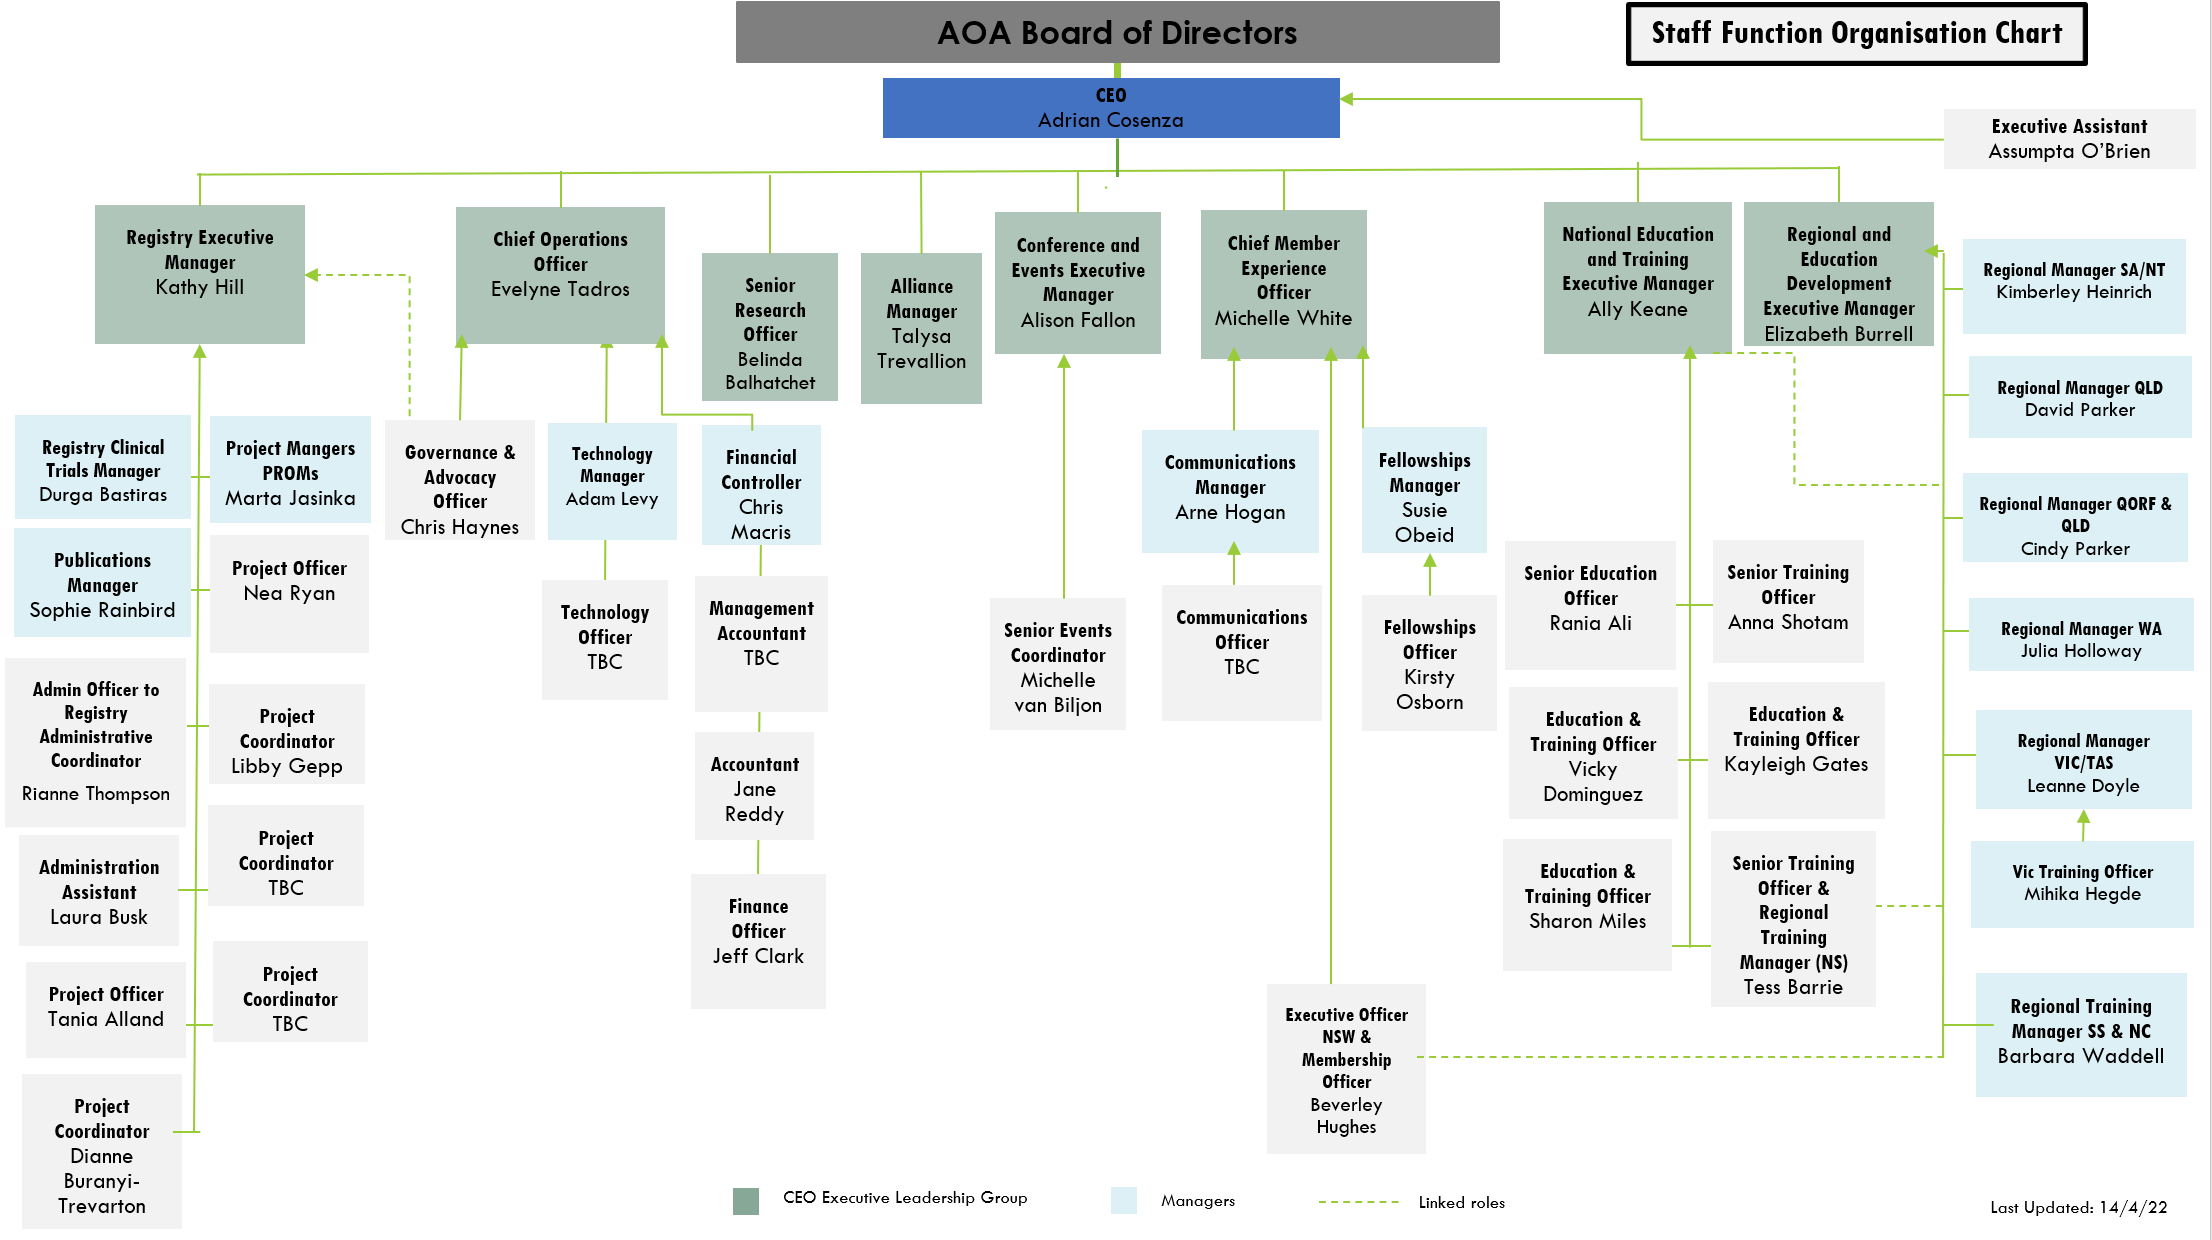 AOA Staff Organisation Chart_14042022